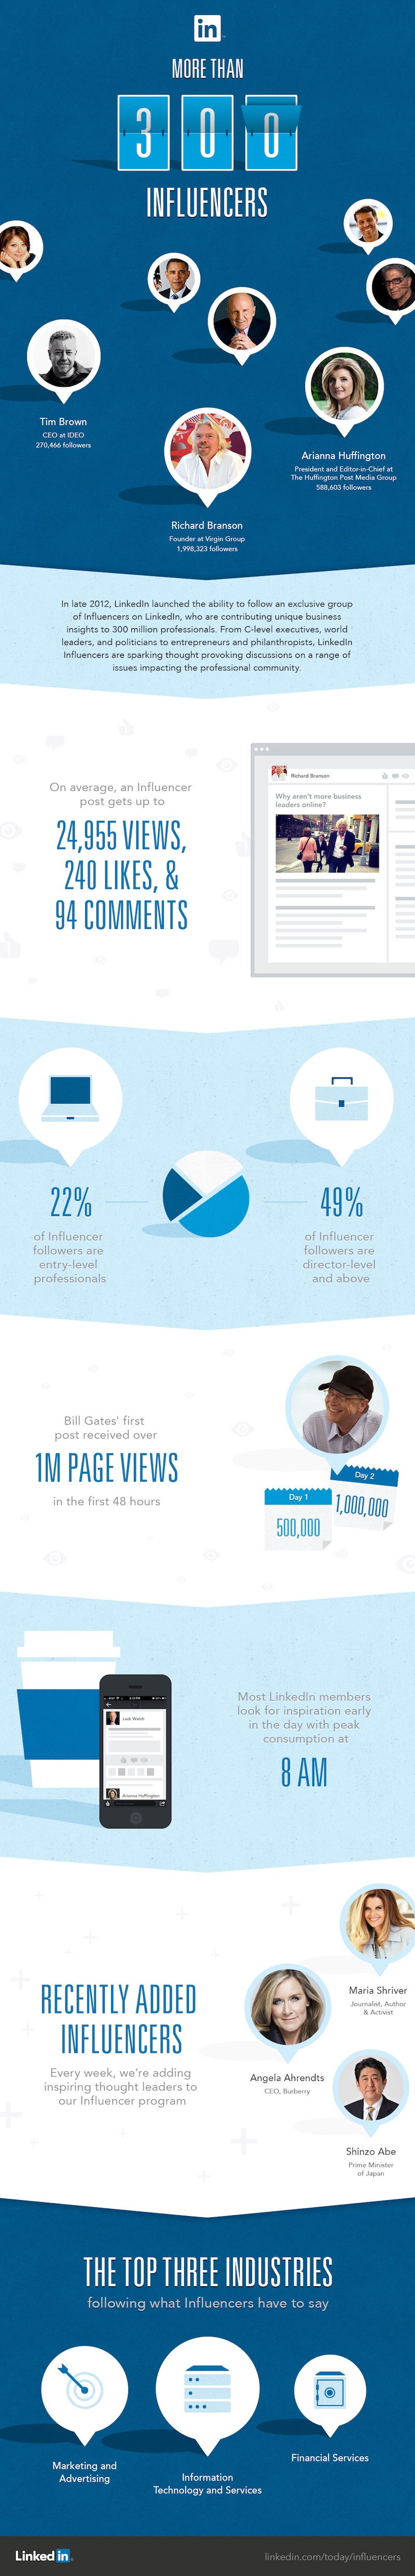 300-LinkedIn-Influencers-Infographic